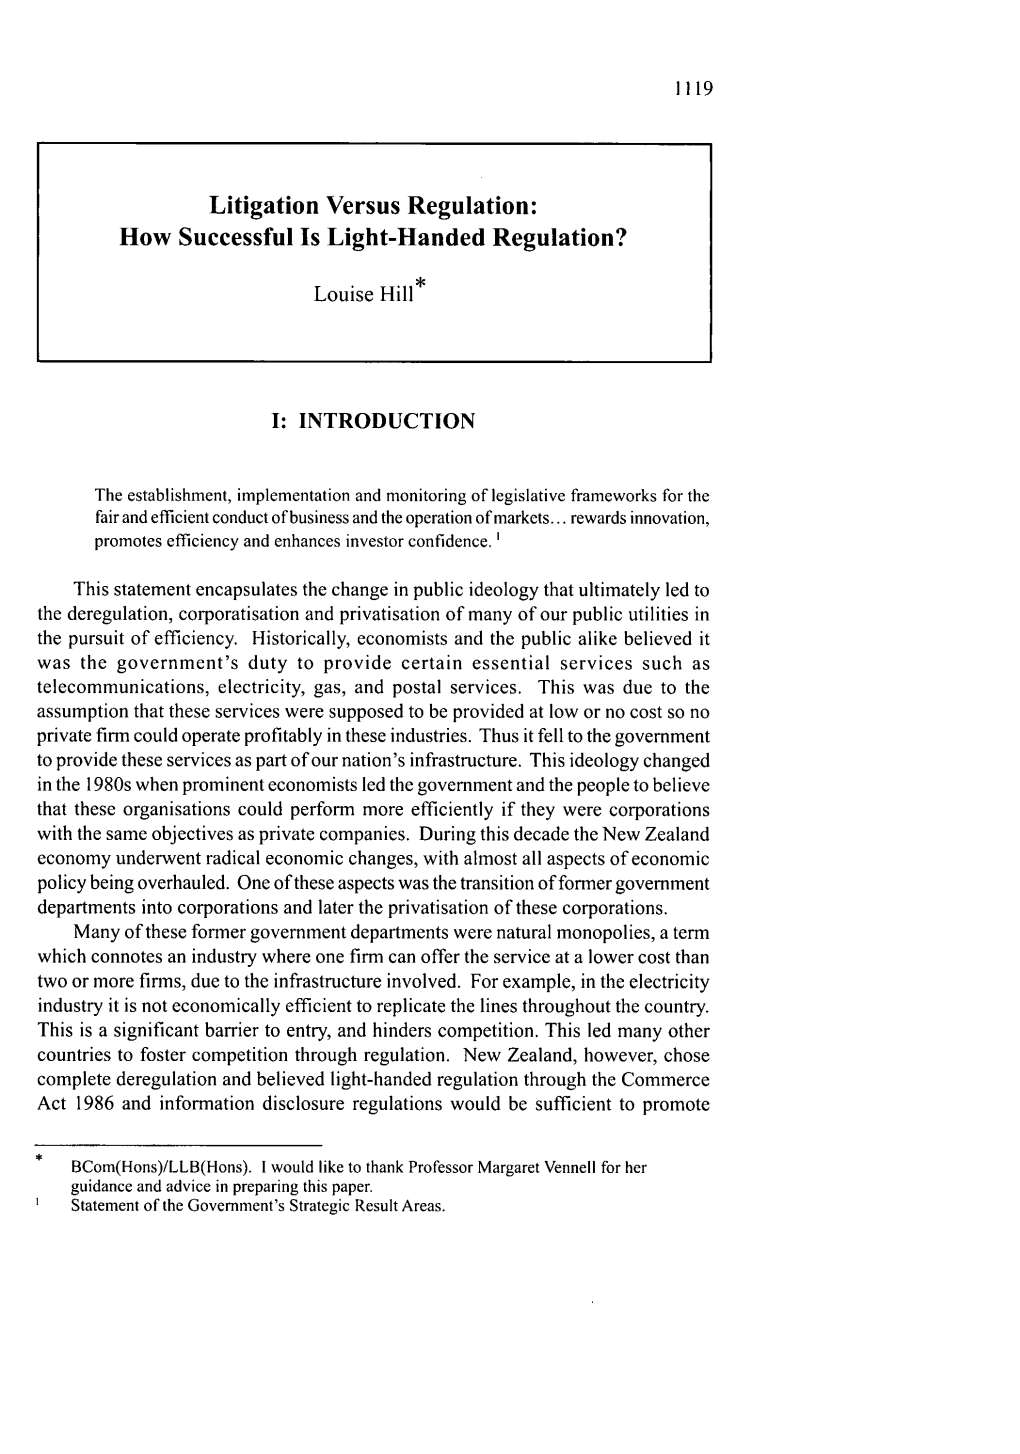 Litigation Versus Regulation: How Successful Is Light-Handed Regulation?